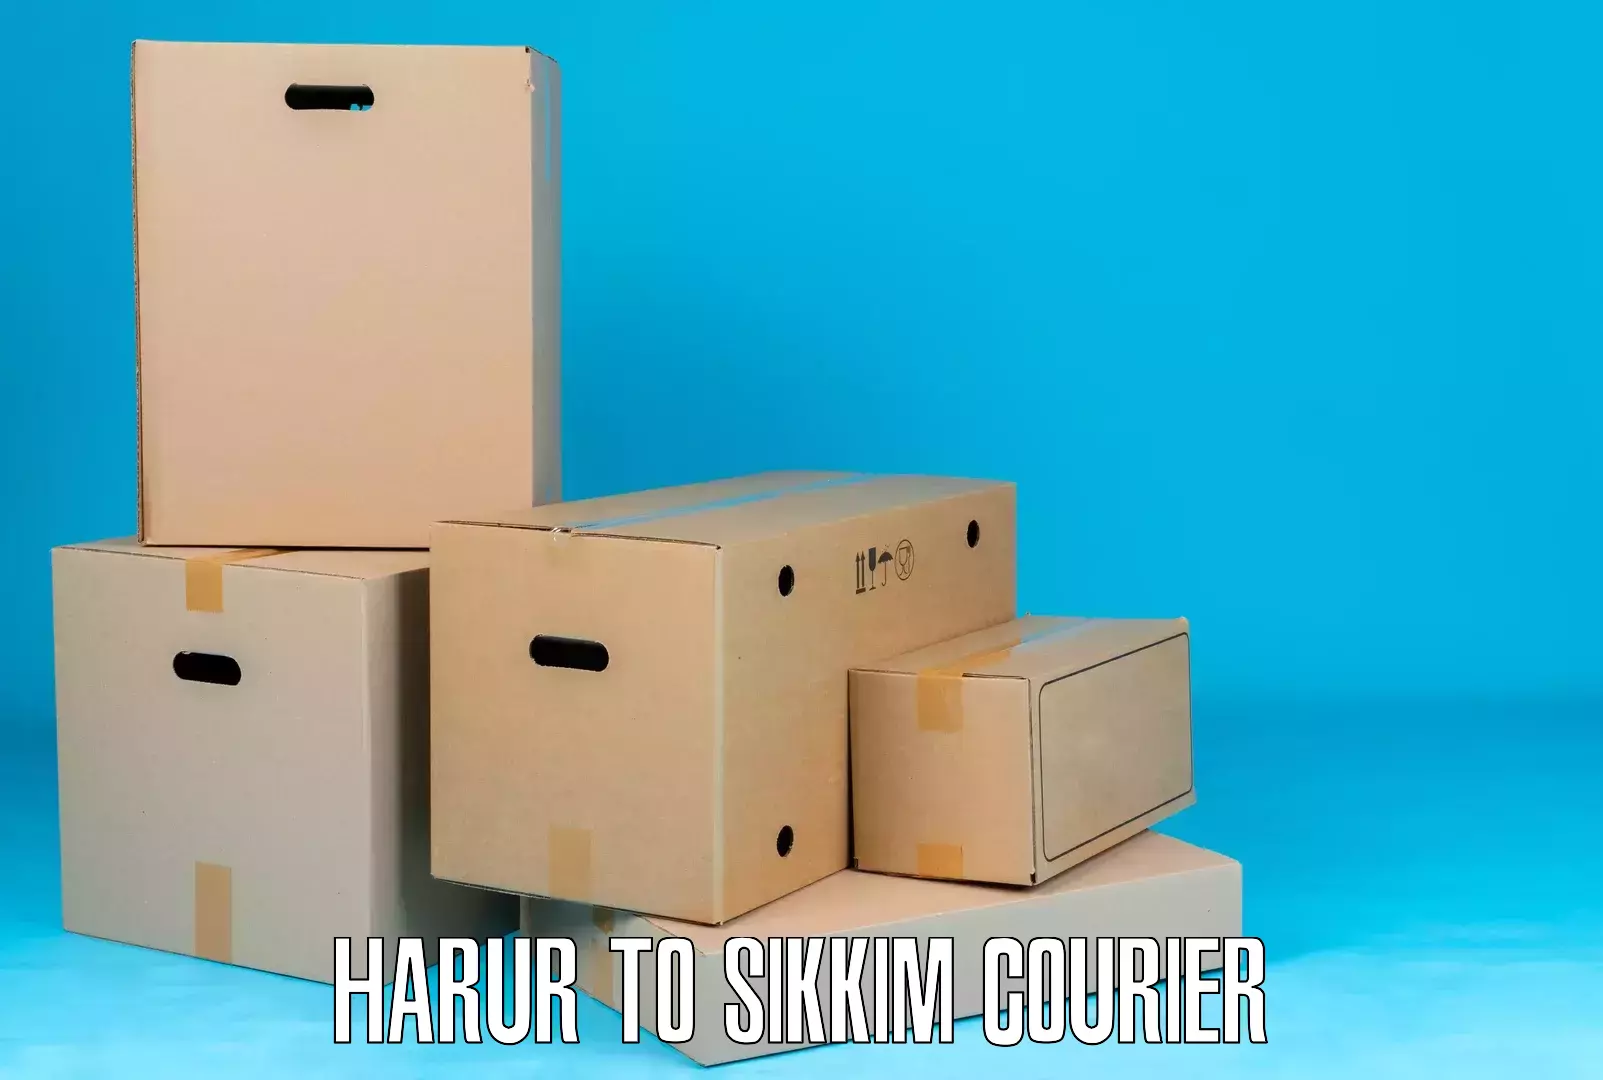 Courier service comparison Harur to Sikkim